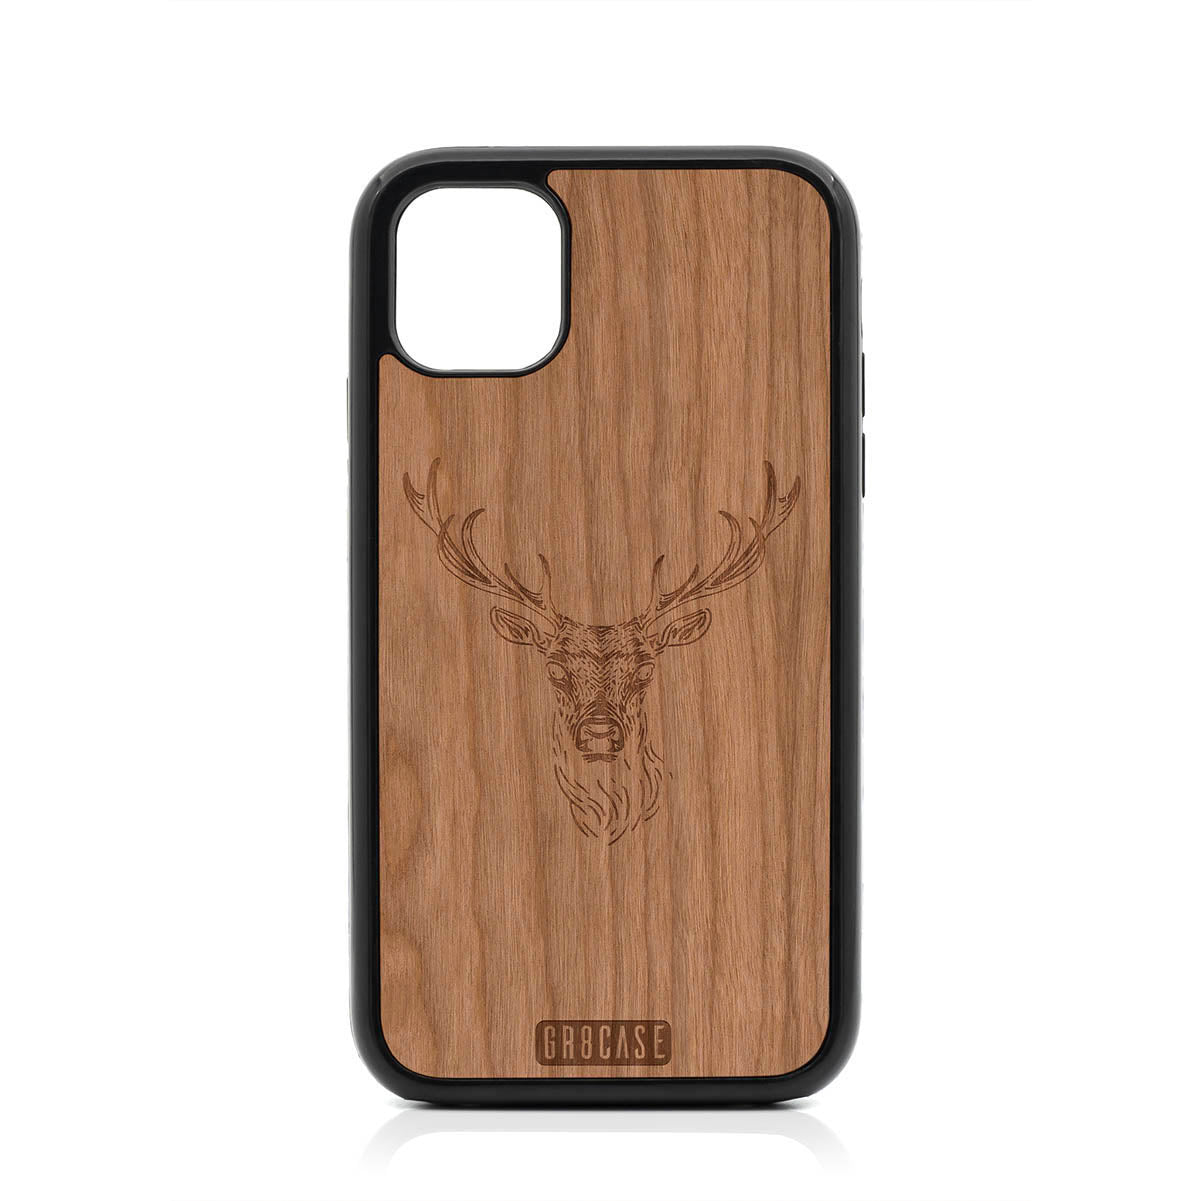 Elk Buck Design Wood Case For iPhone 11 by GR8CASE